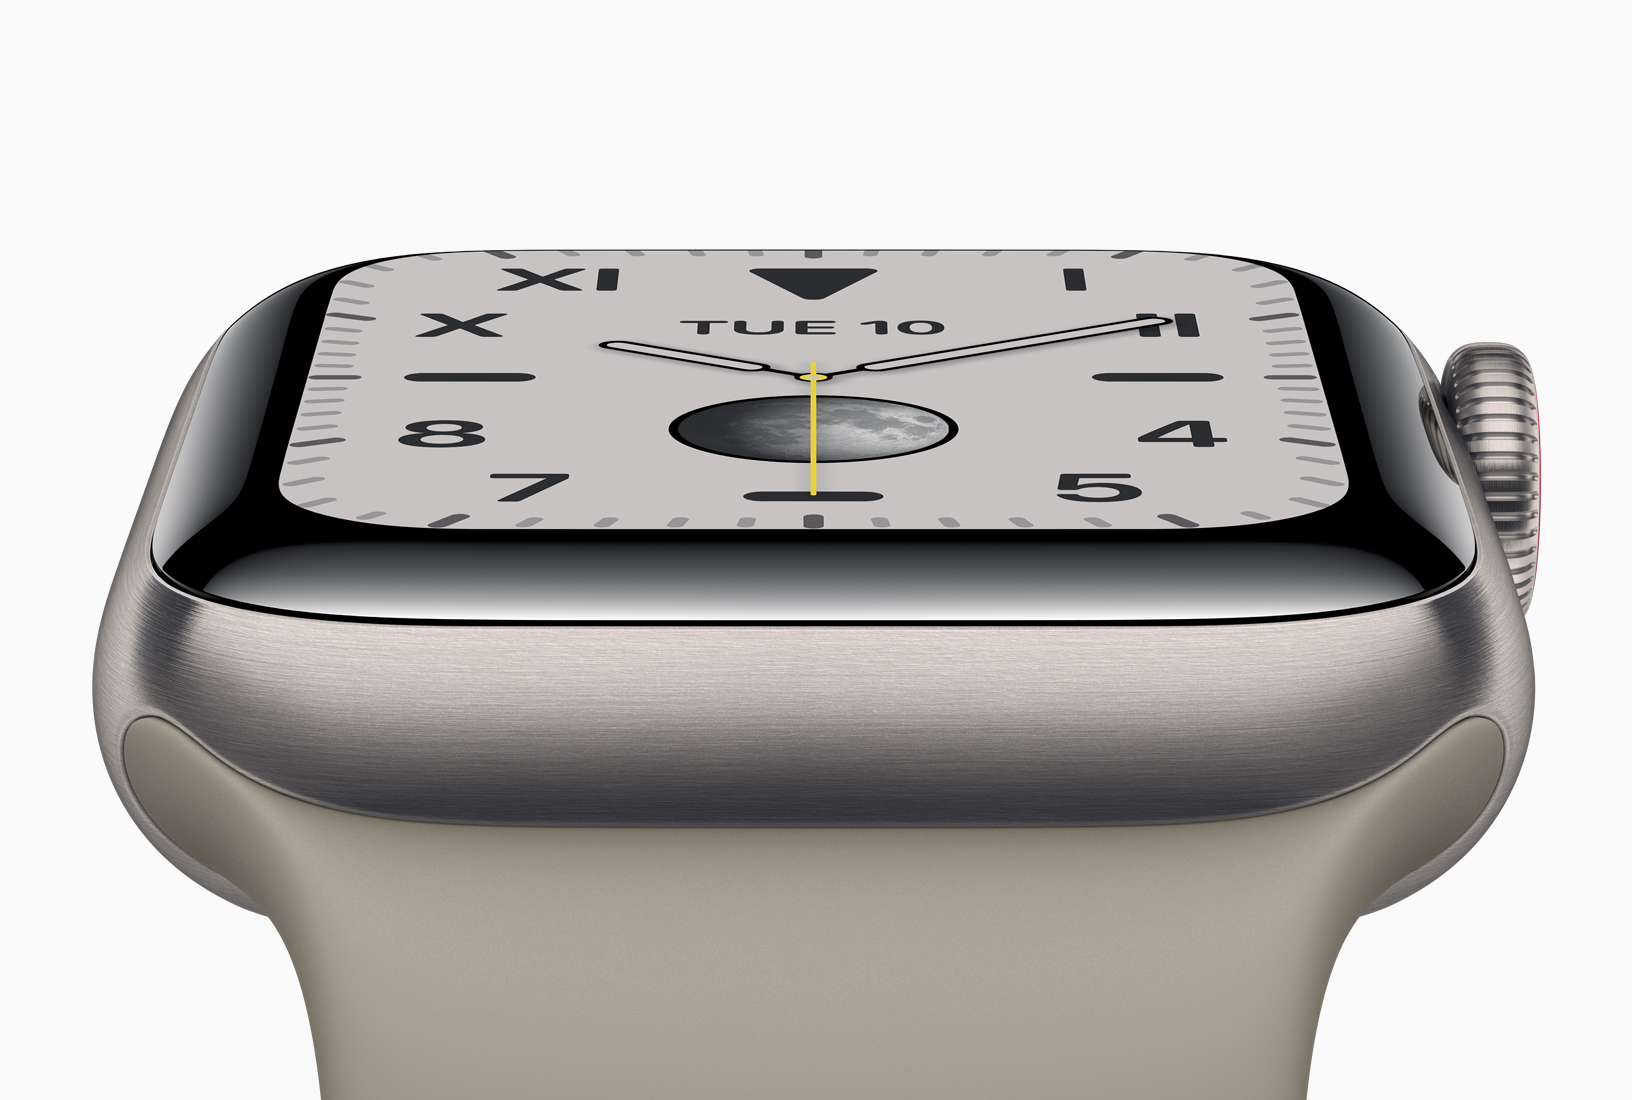 3) Apple Watch Series 5